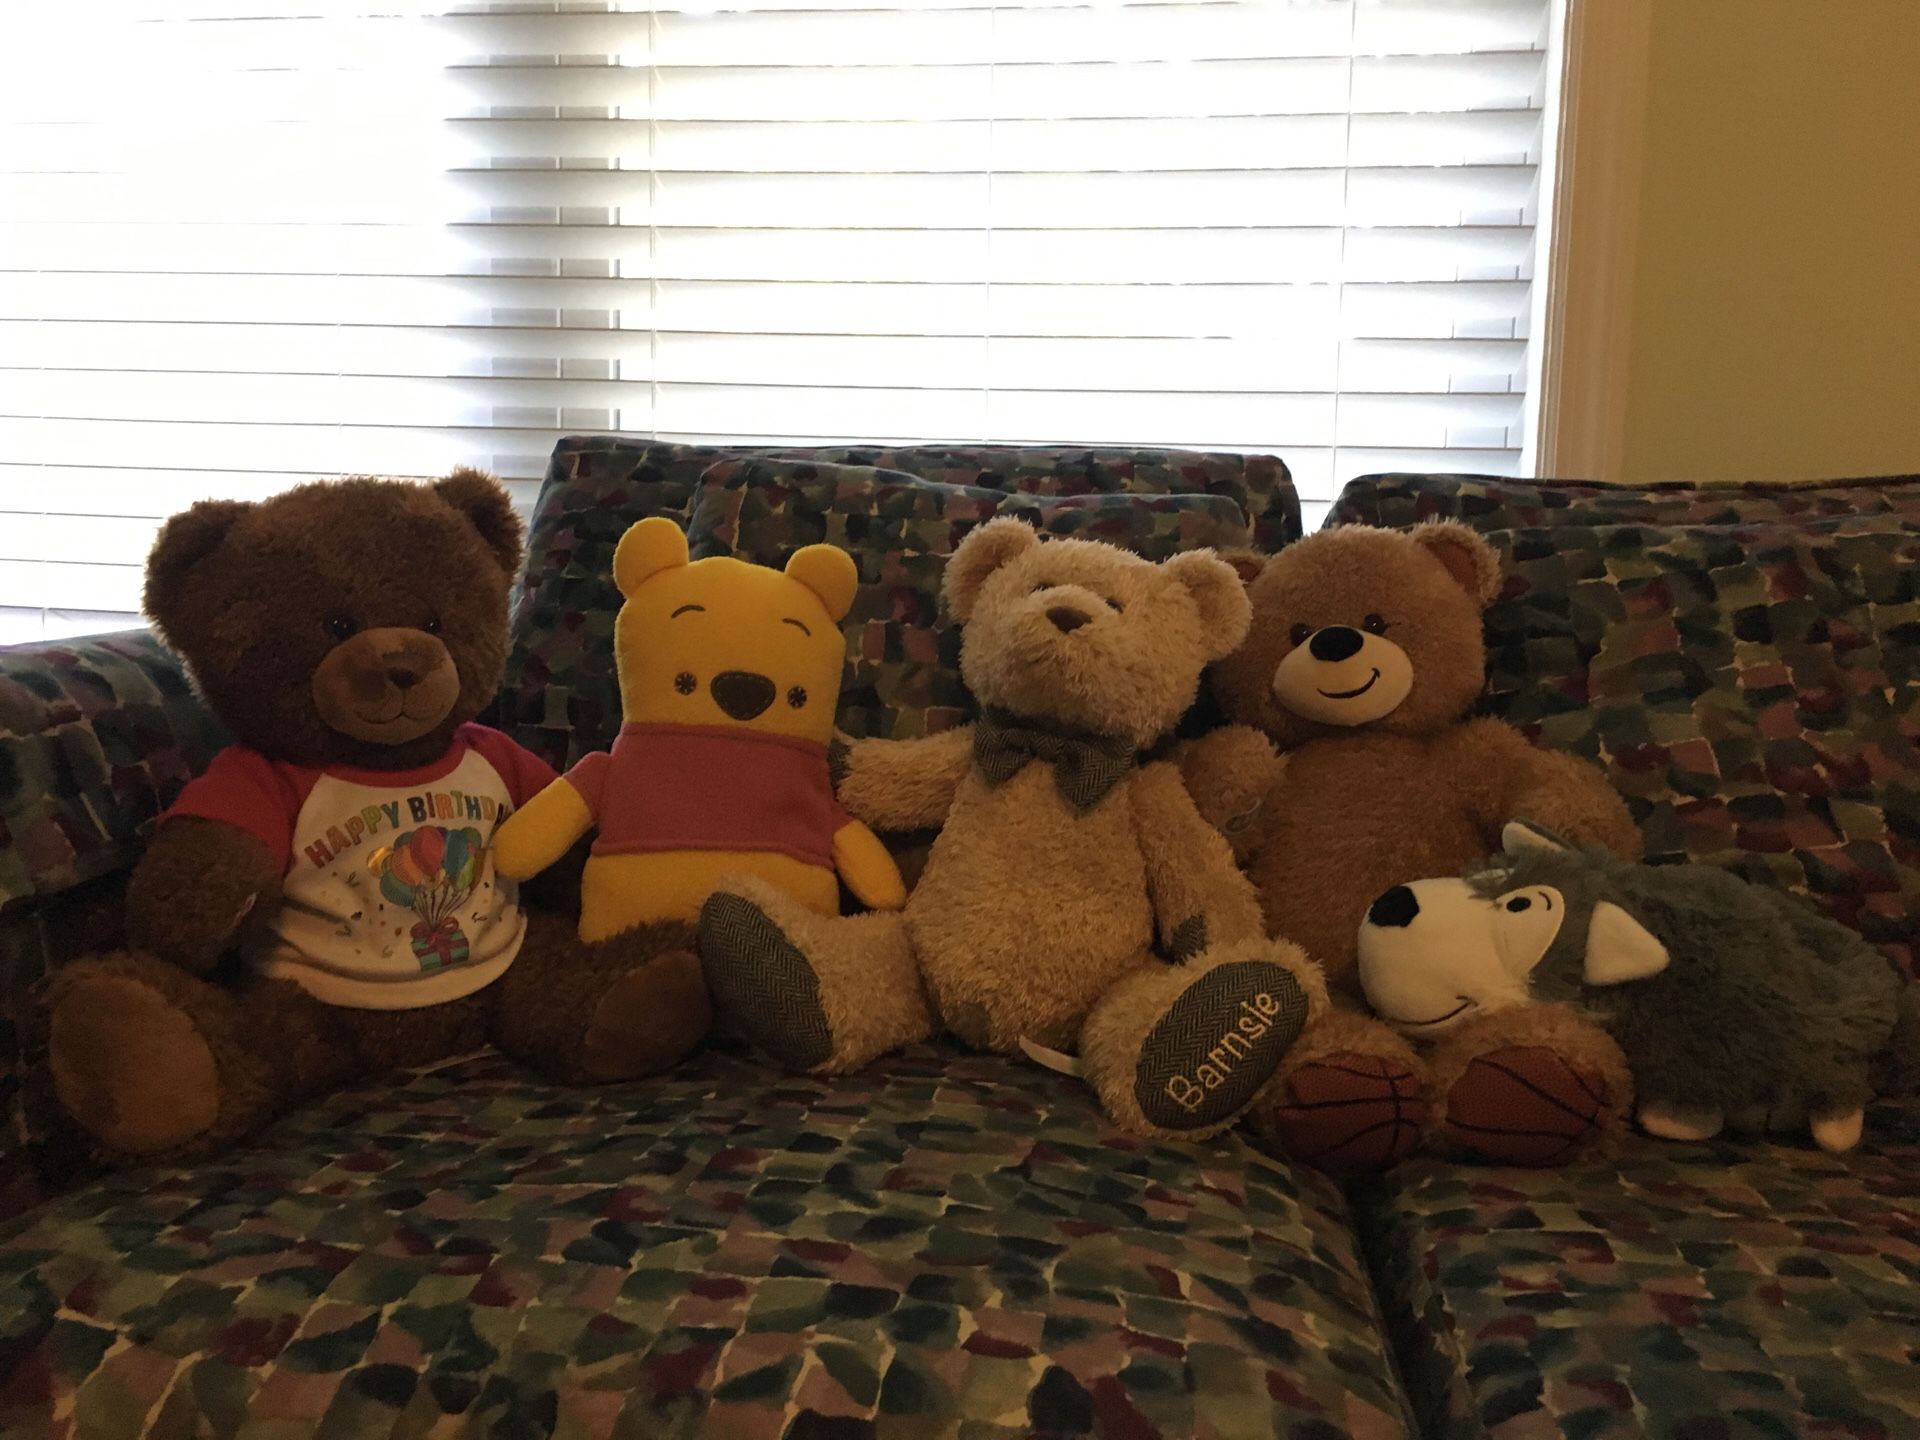 Teddy bears 🧸 and their friends